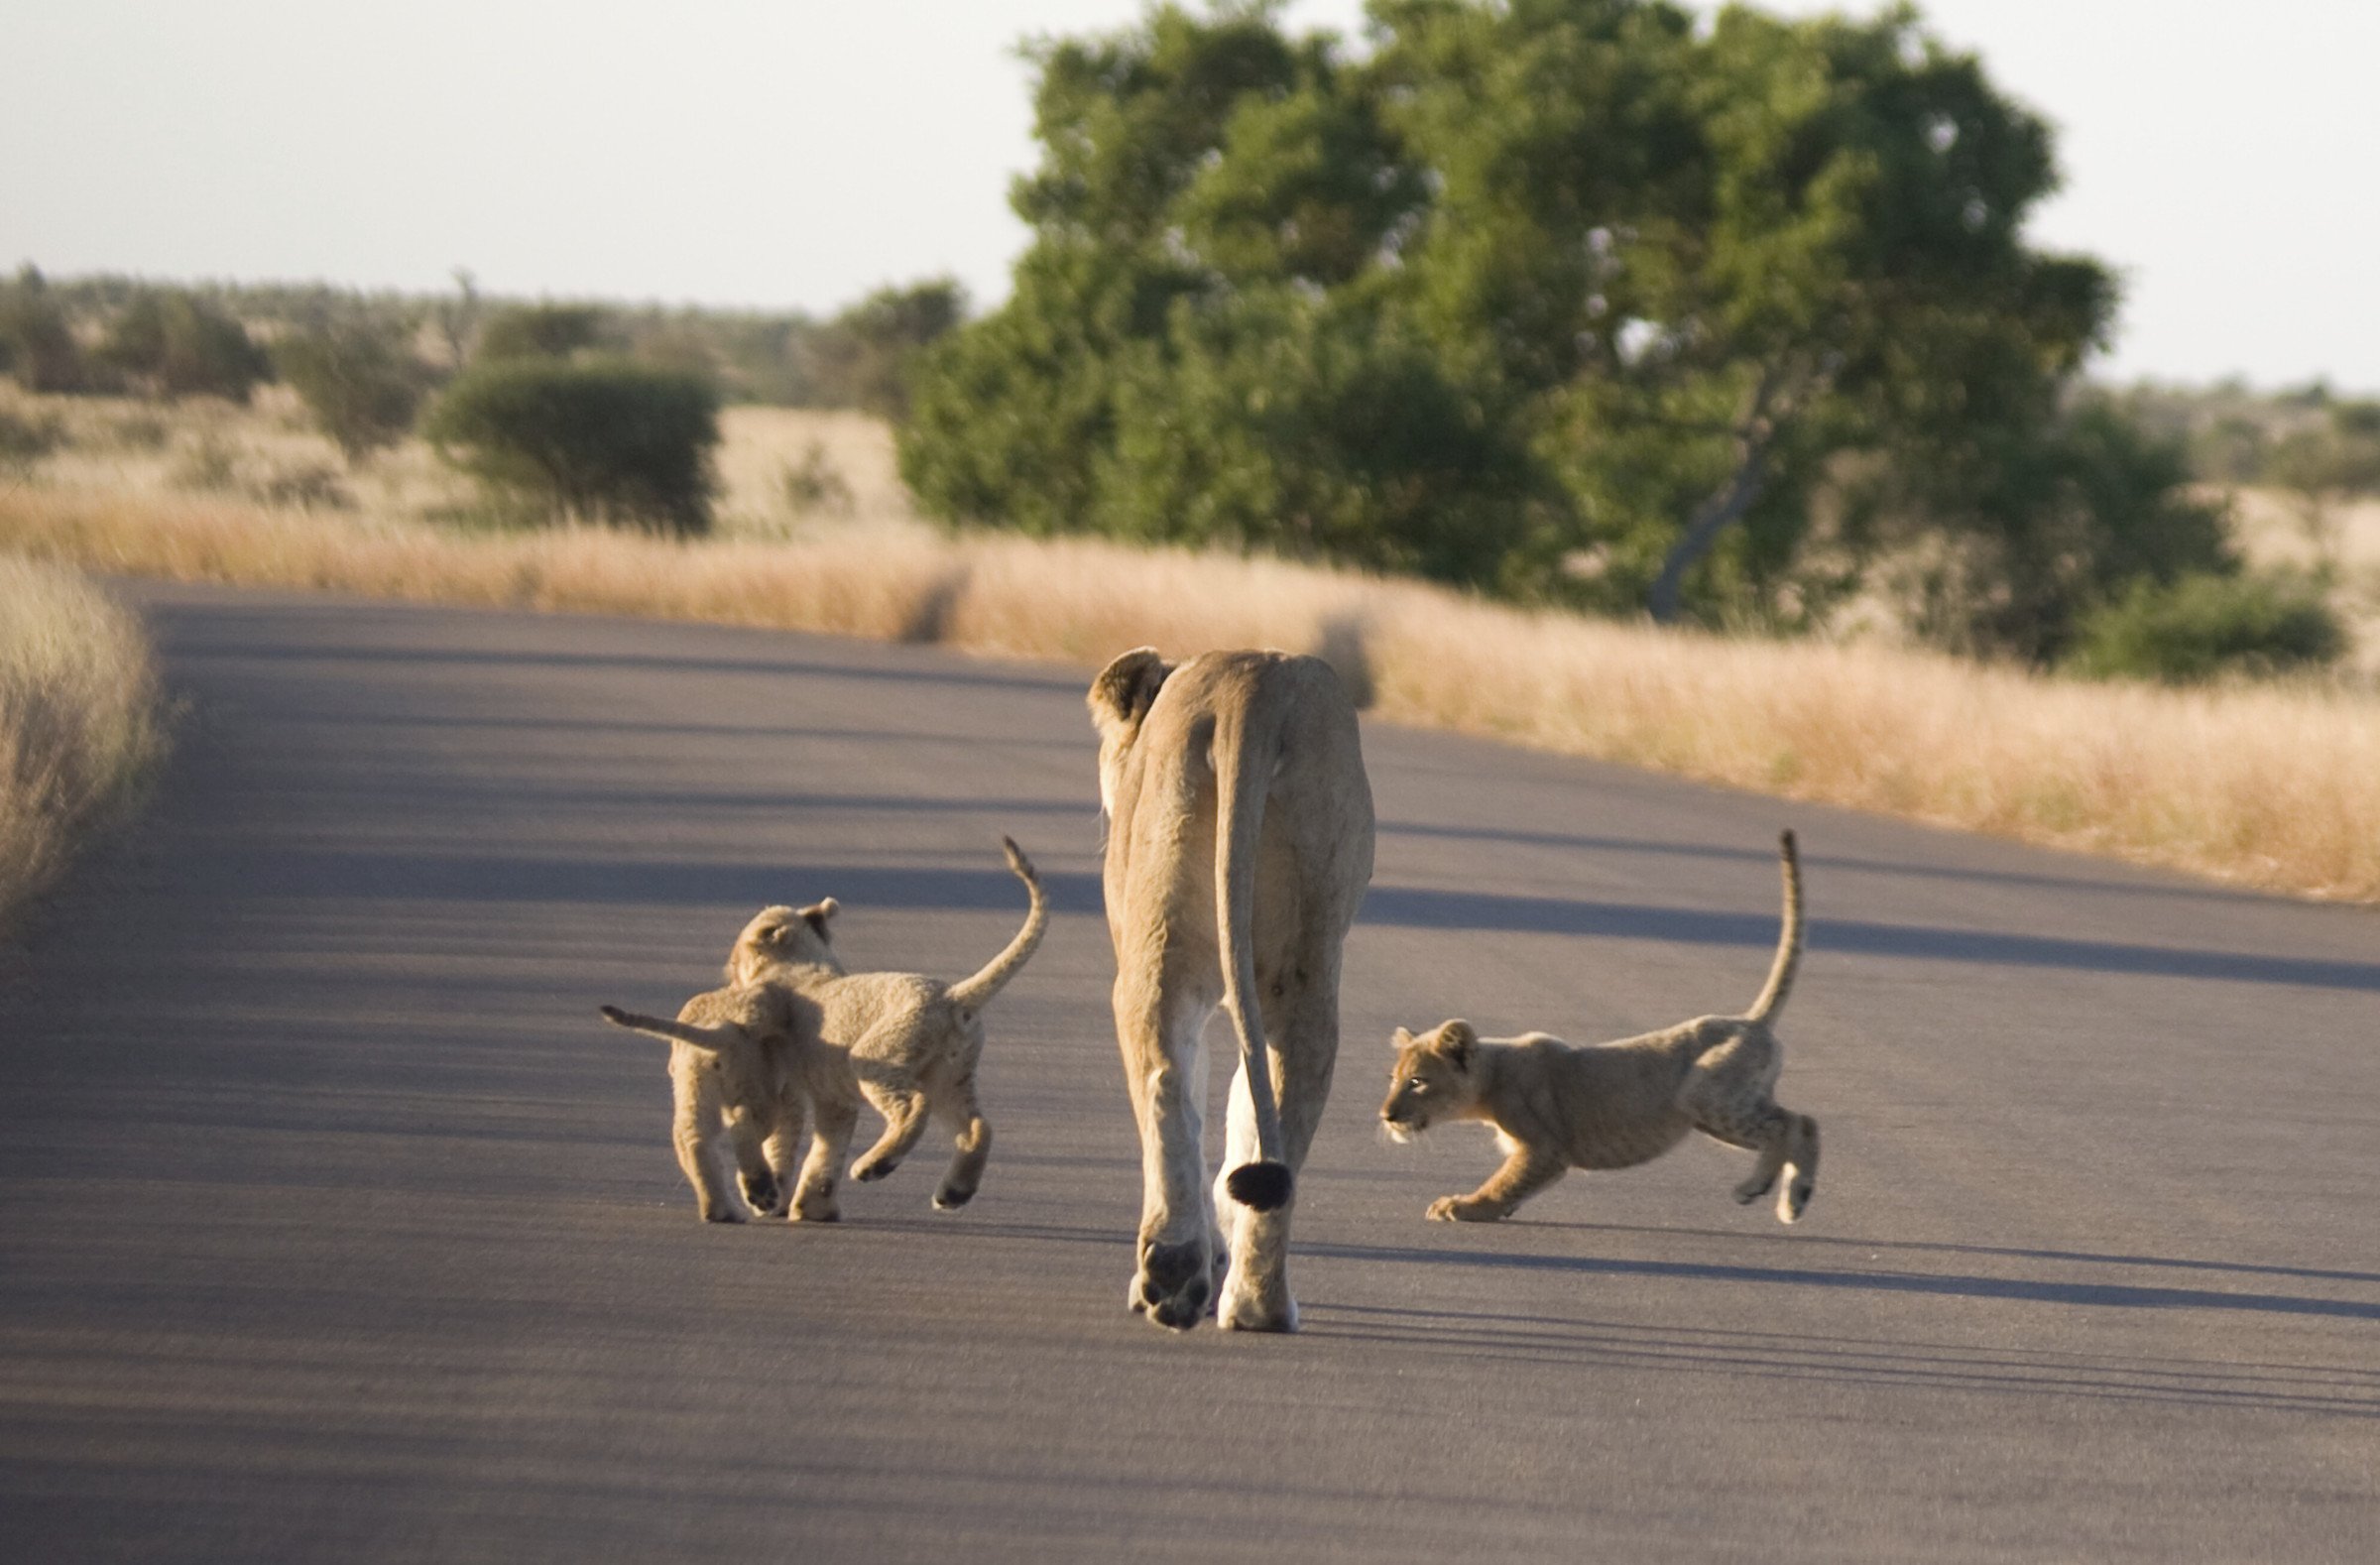 leeuwin met welpen in zuid-afrika